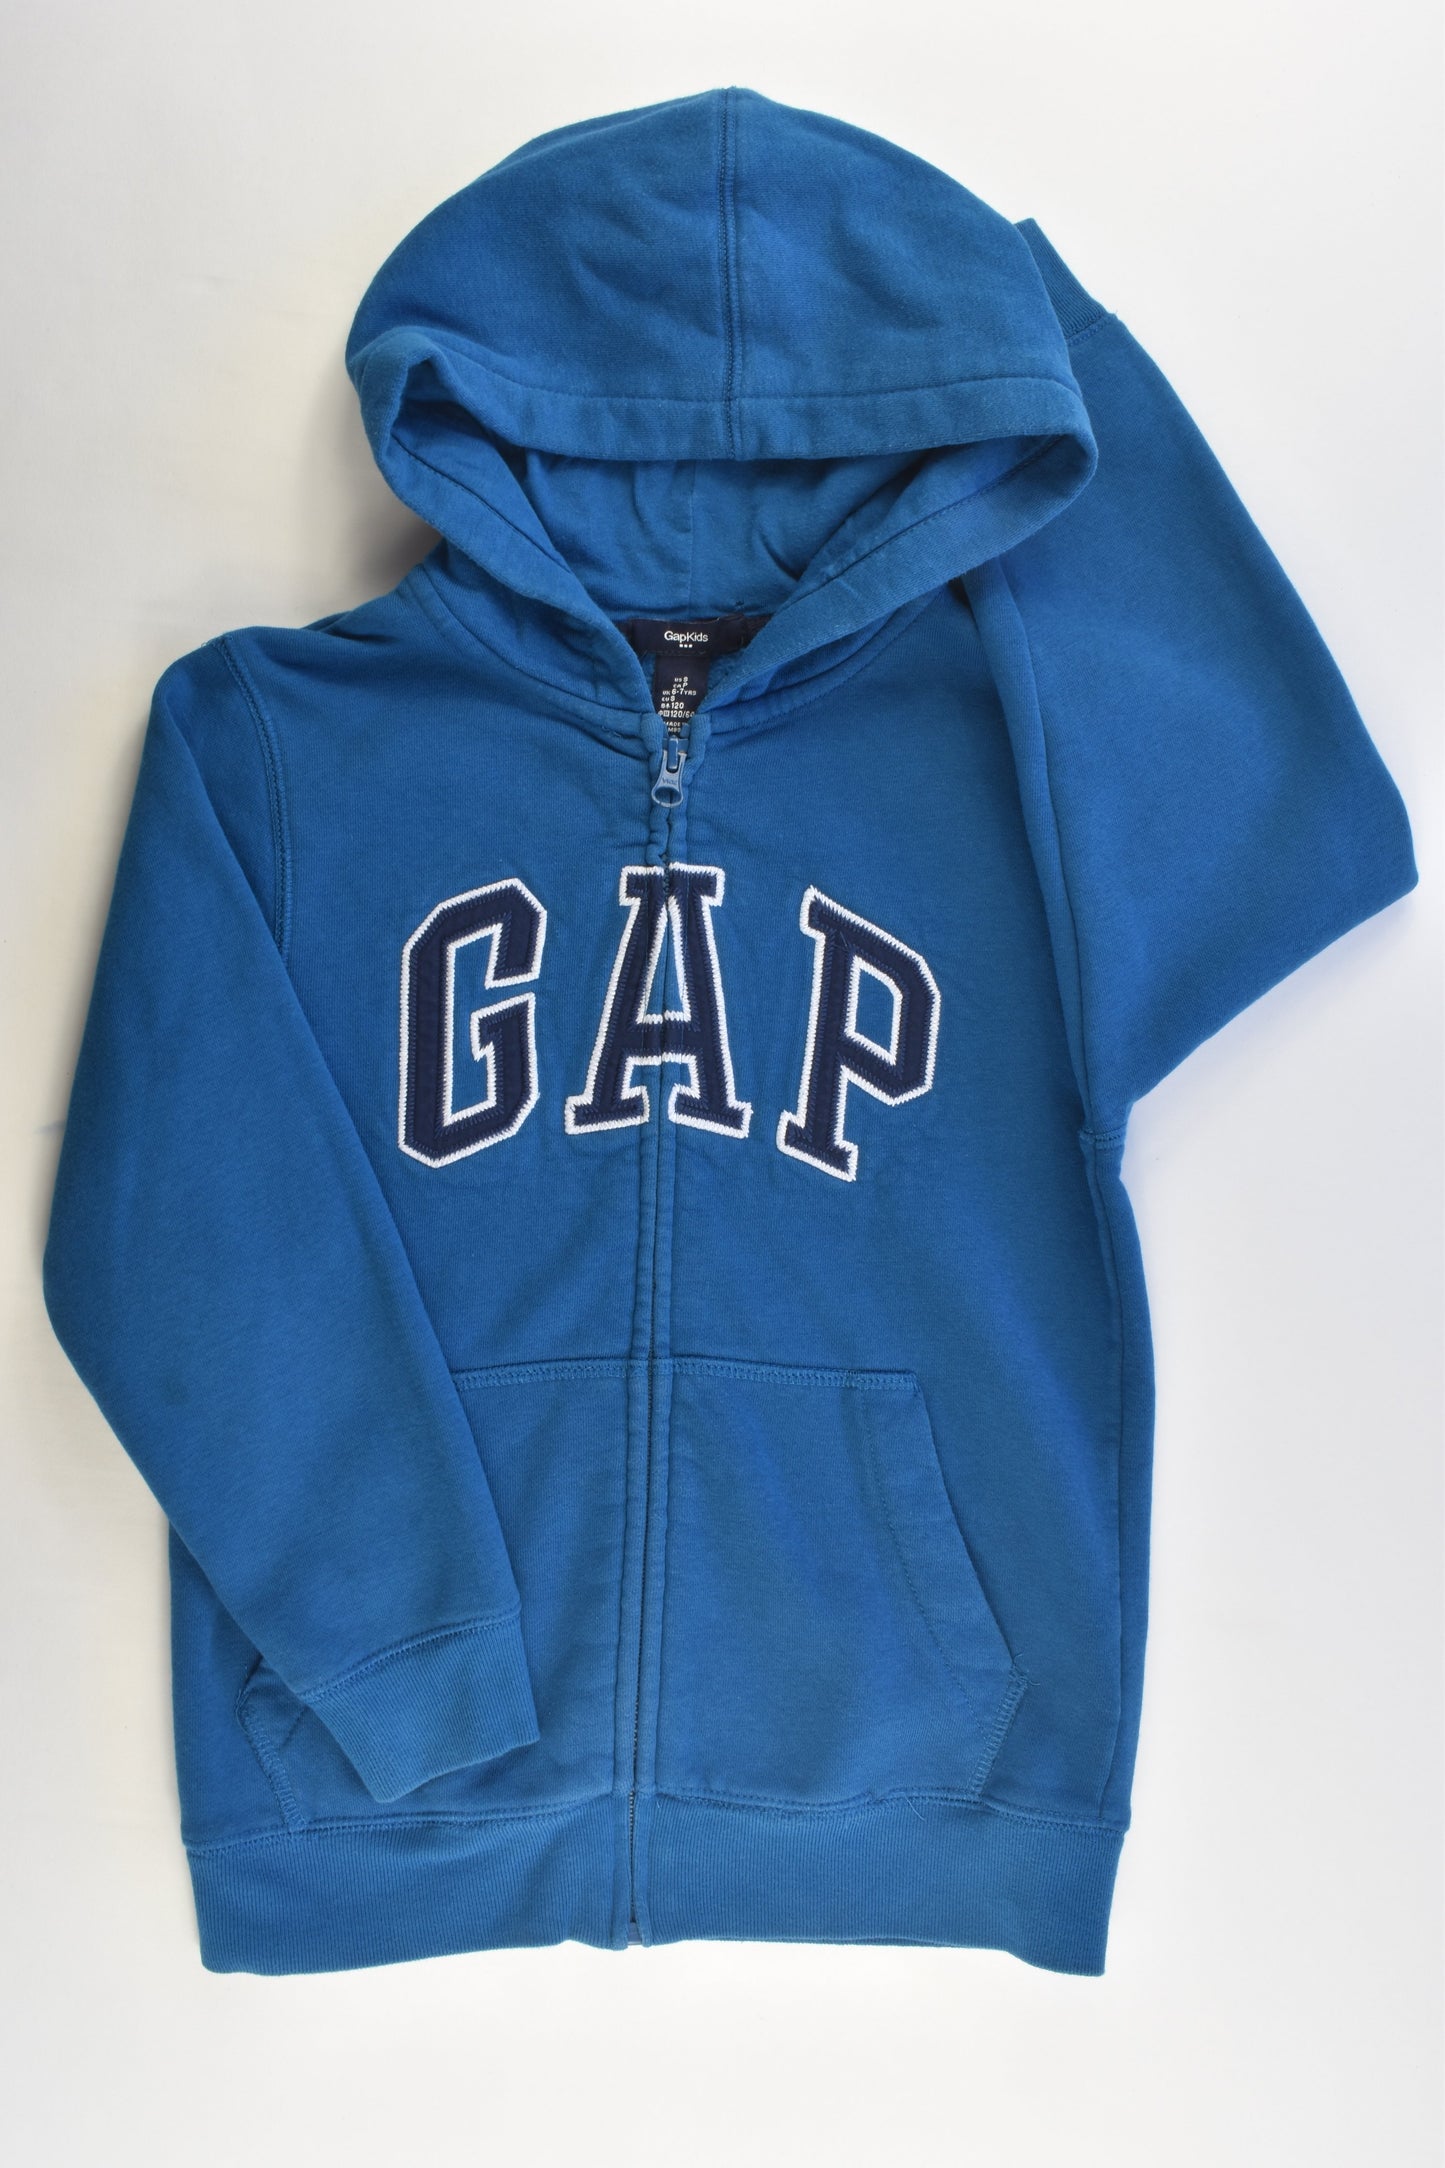 Gap Kids Size 6-7 Hooded Jumper